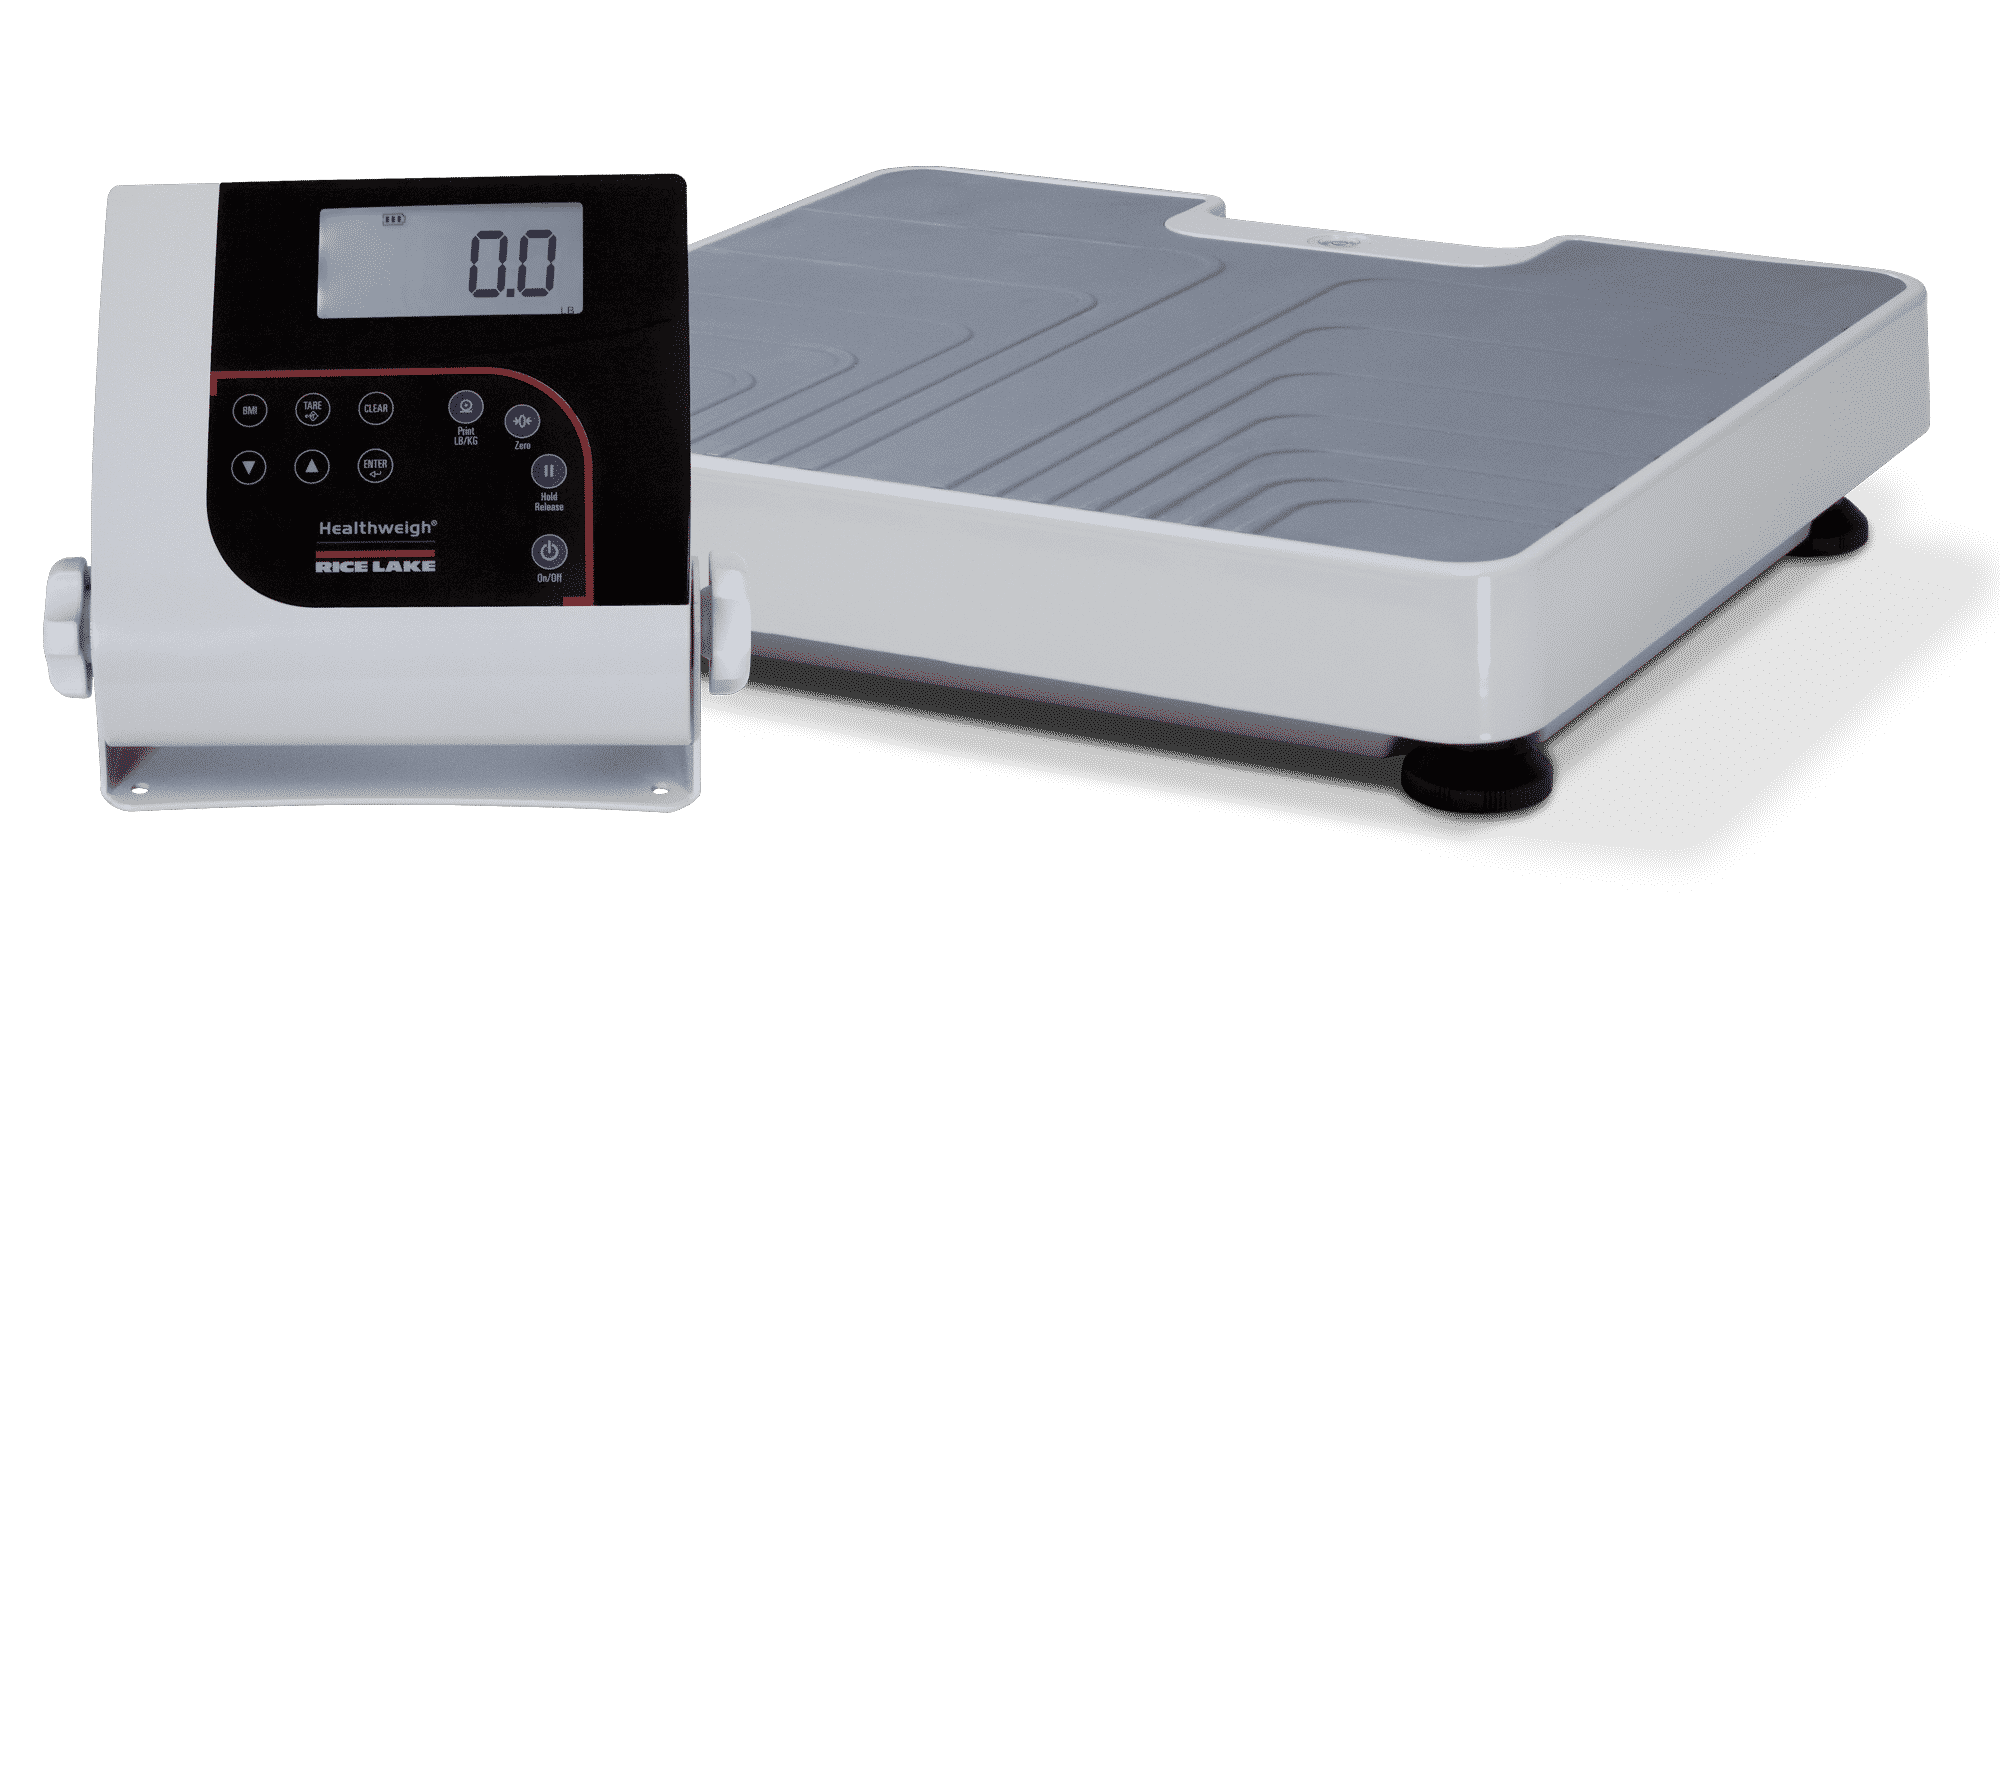 Doran Scales DS6150 Remote Indicator Scale